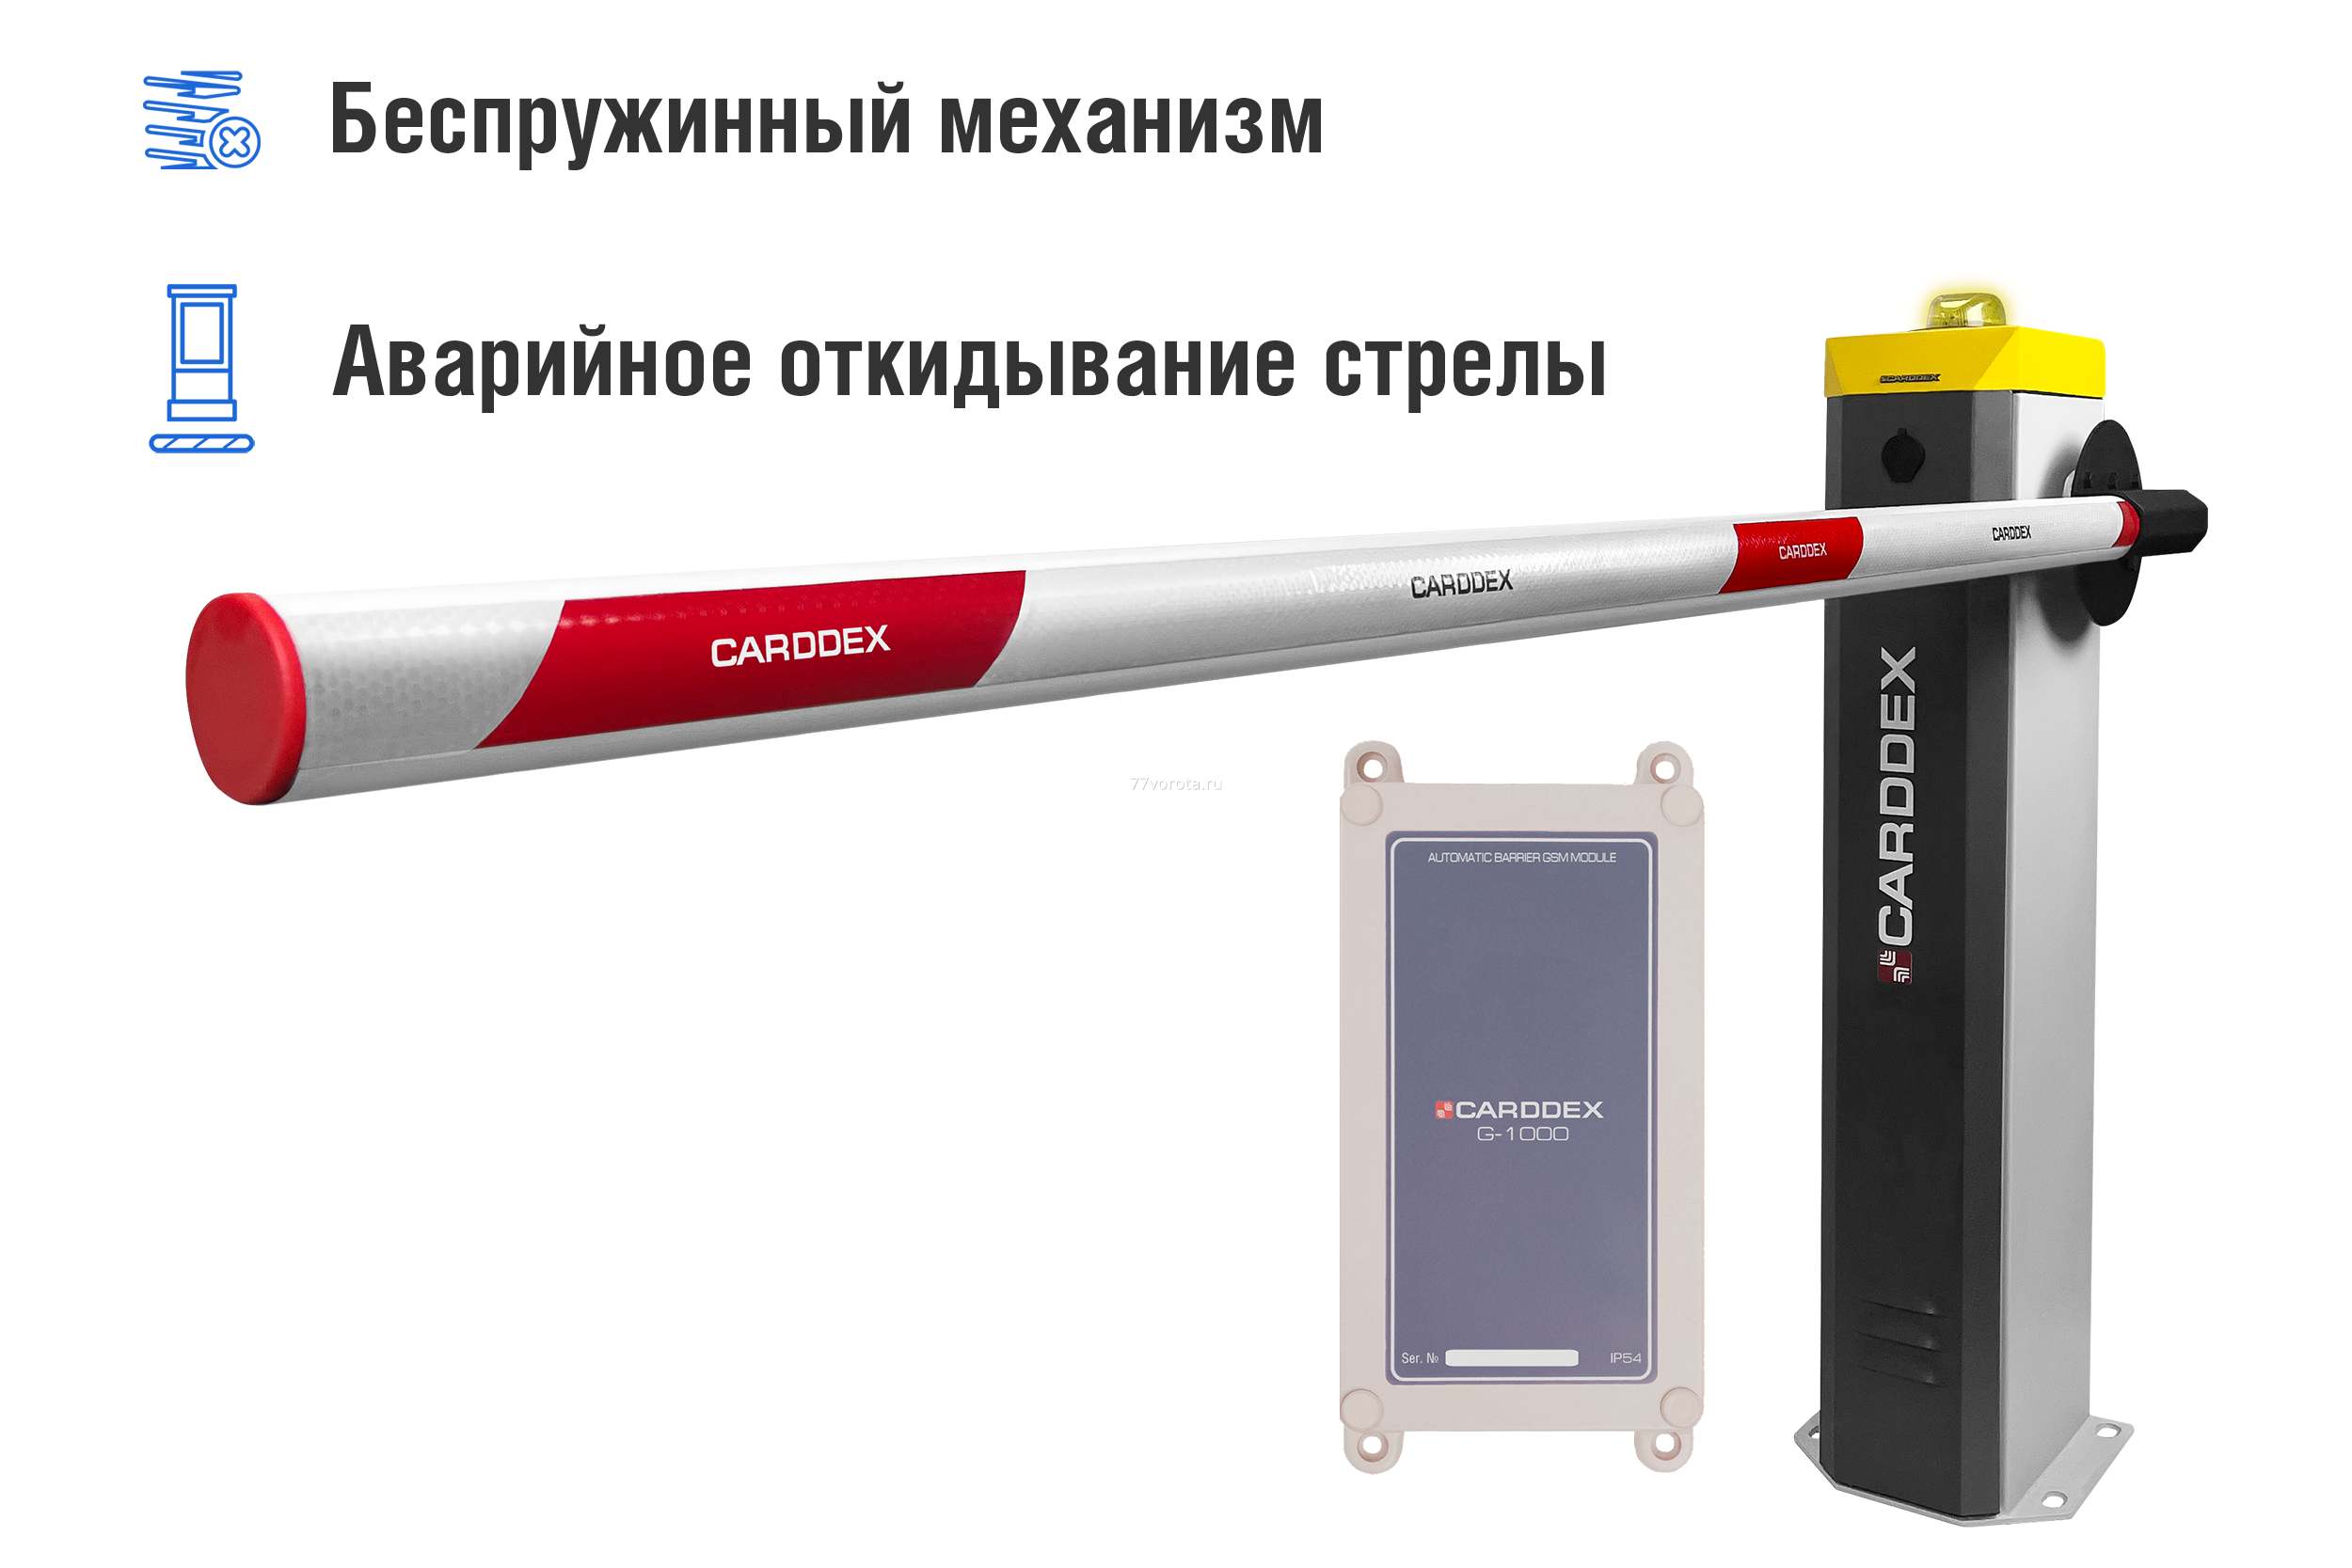 Автоматический шлагбаум CARDDEX «RBS-L», комплект «Стандарт Плюс GSM-L» - фото 1